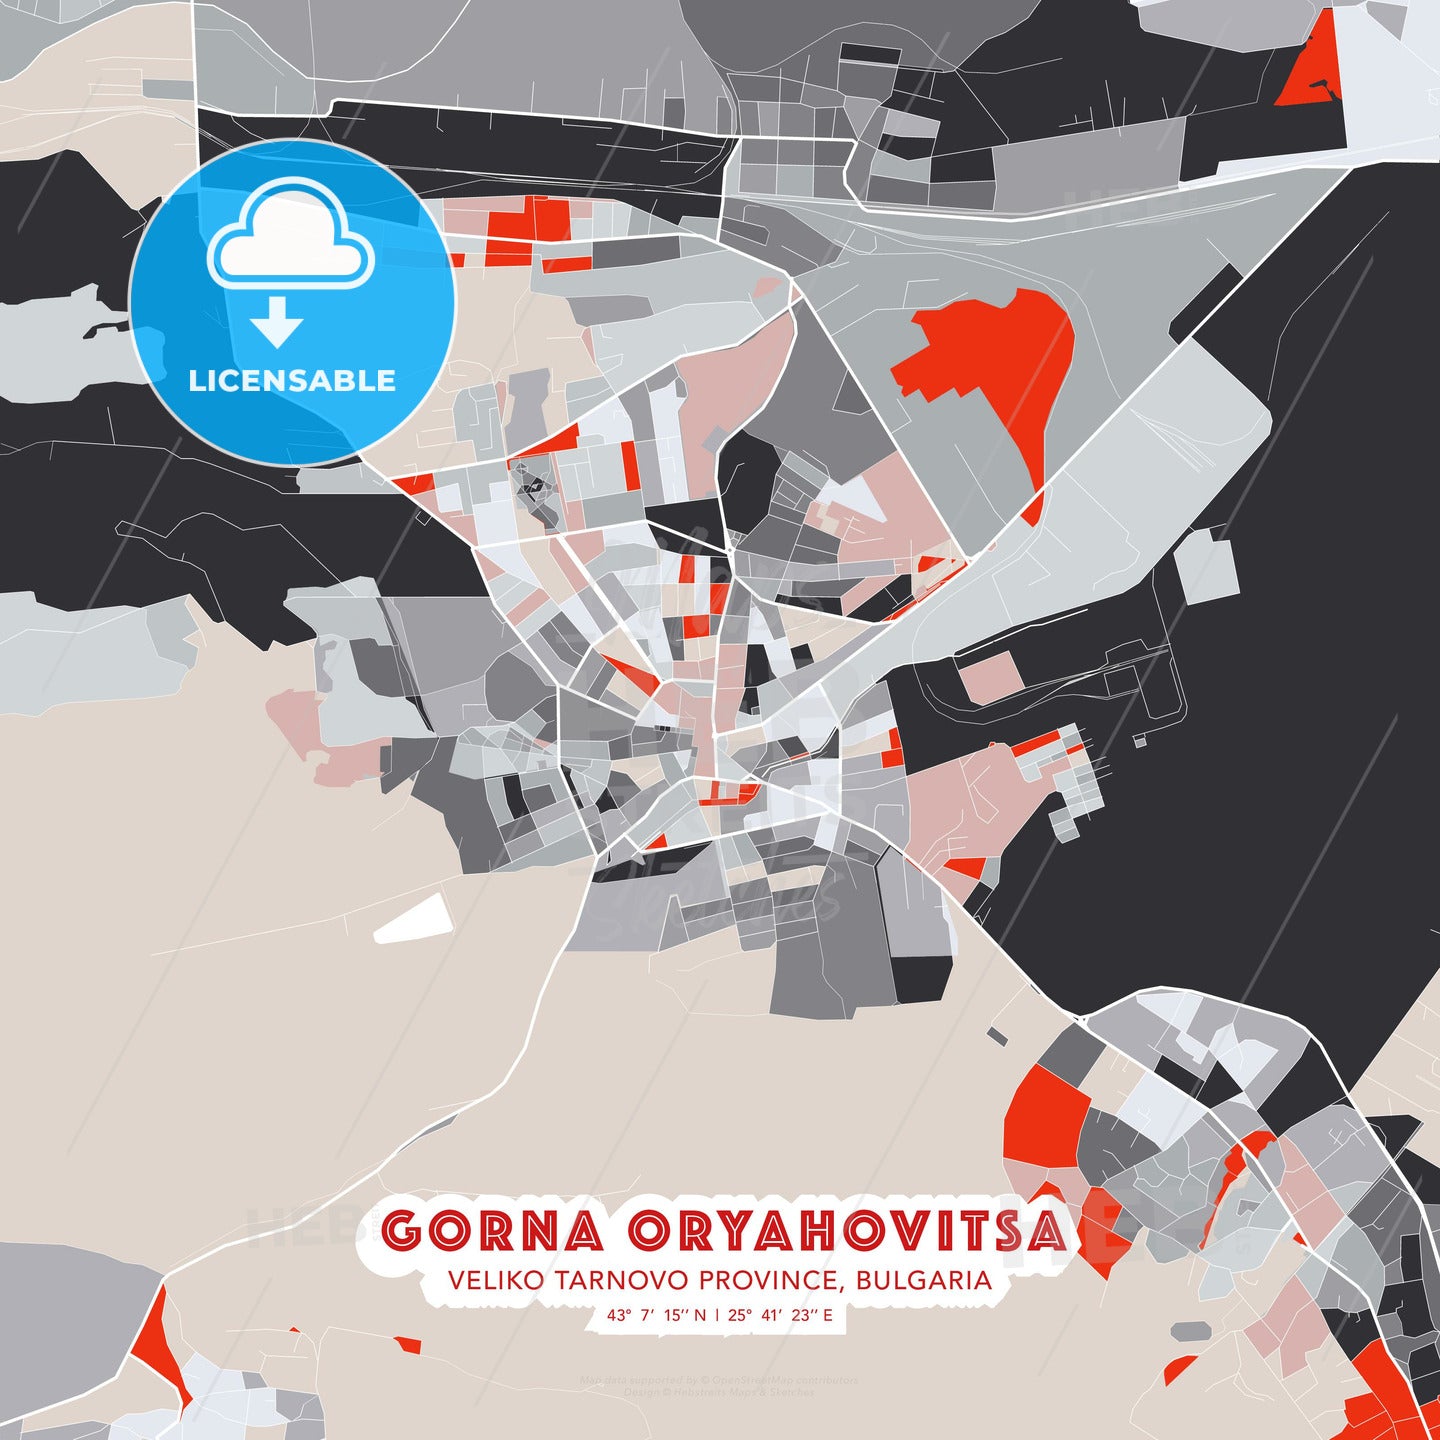 Gorna Oryahovitsa, Veliko Tarnovo Province, Bulgaria, modern map - HEBSTREITS Sketches